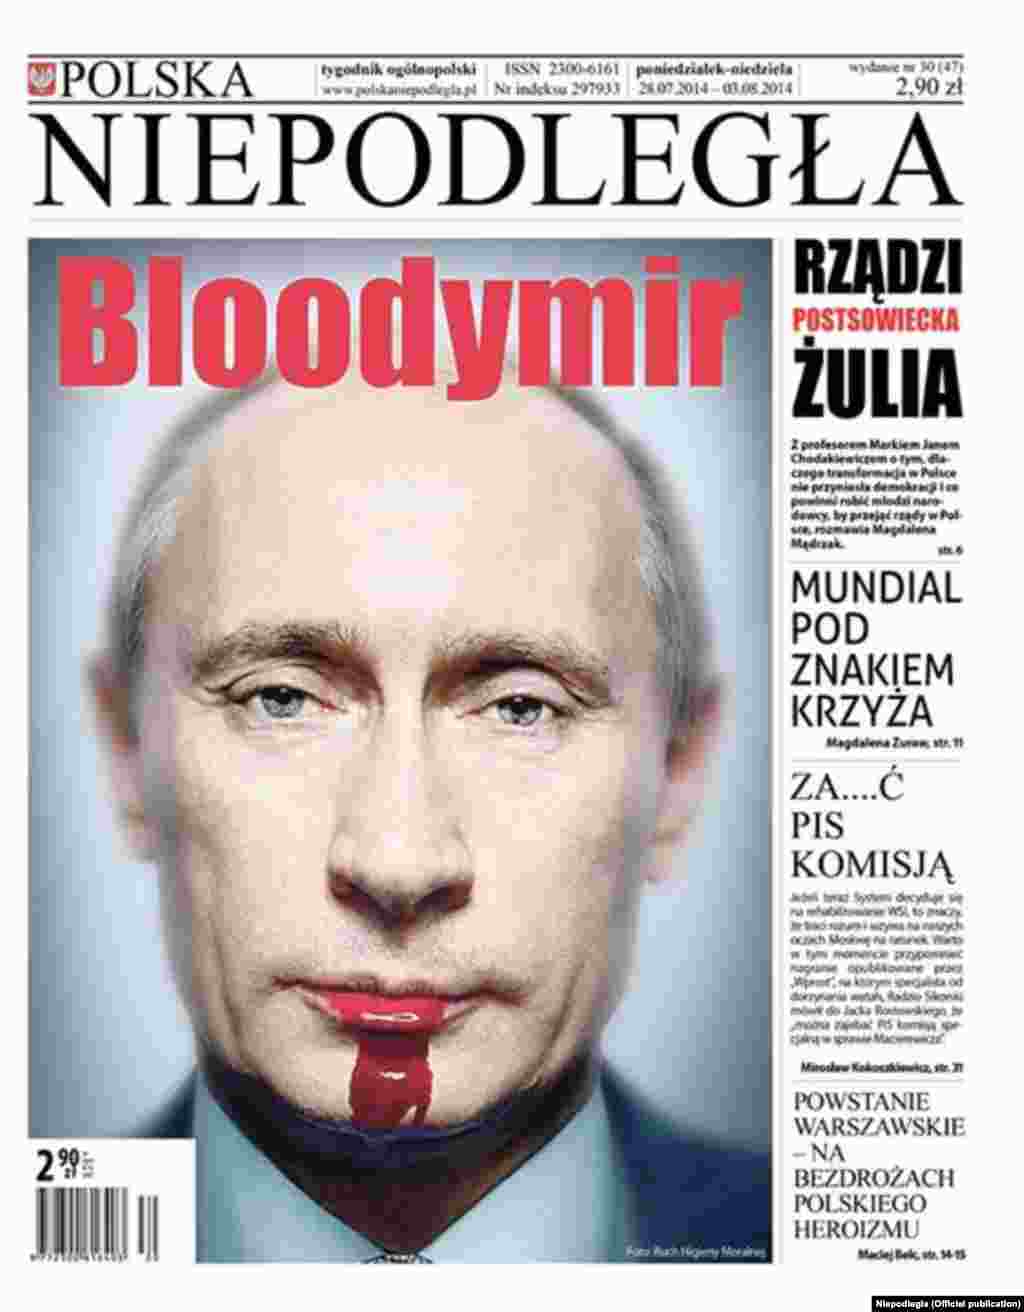 Poljski nedjeljnik &quot;Niepodlegla&quot; od 28. jula ruskog vođu naziva &quot;Bloodymir&quot; (Krvimir).